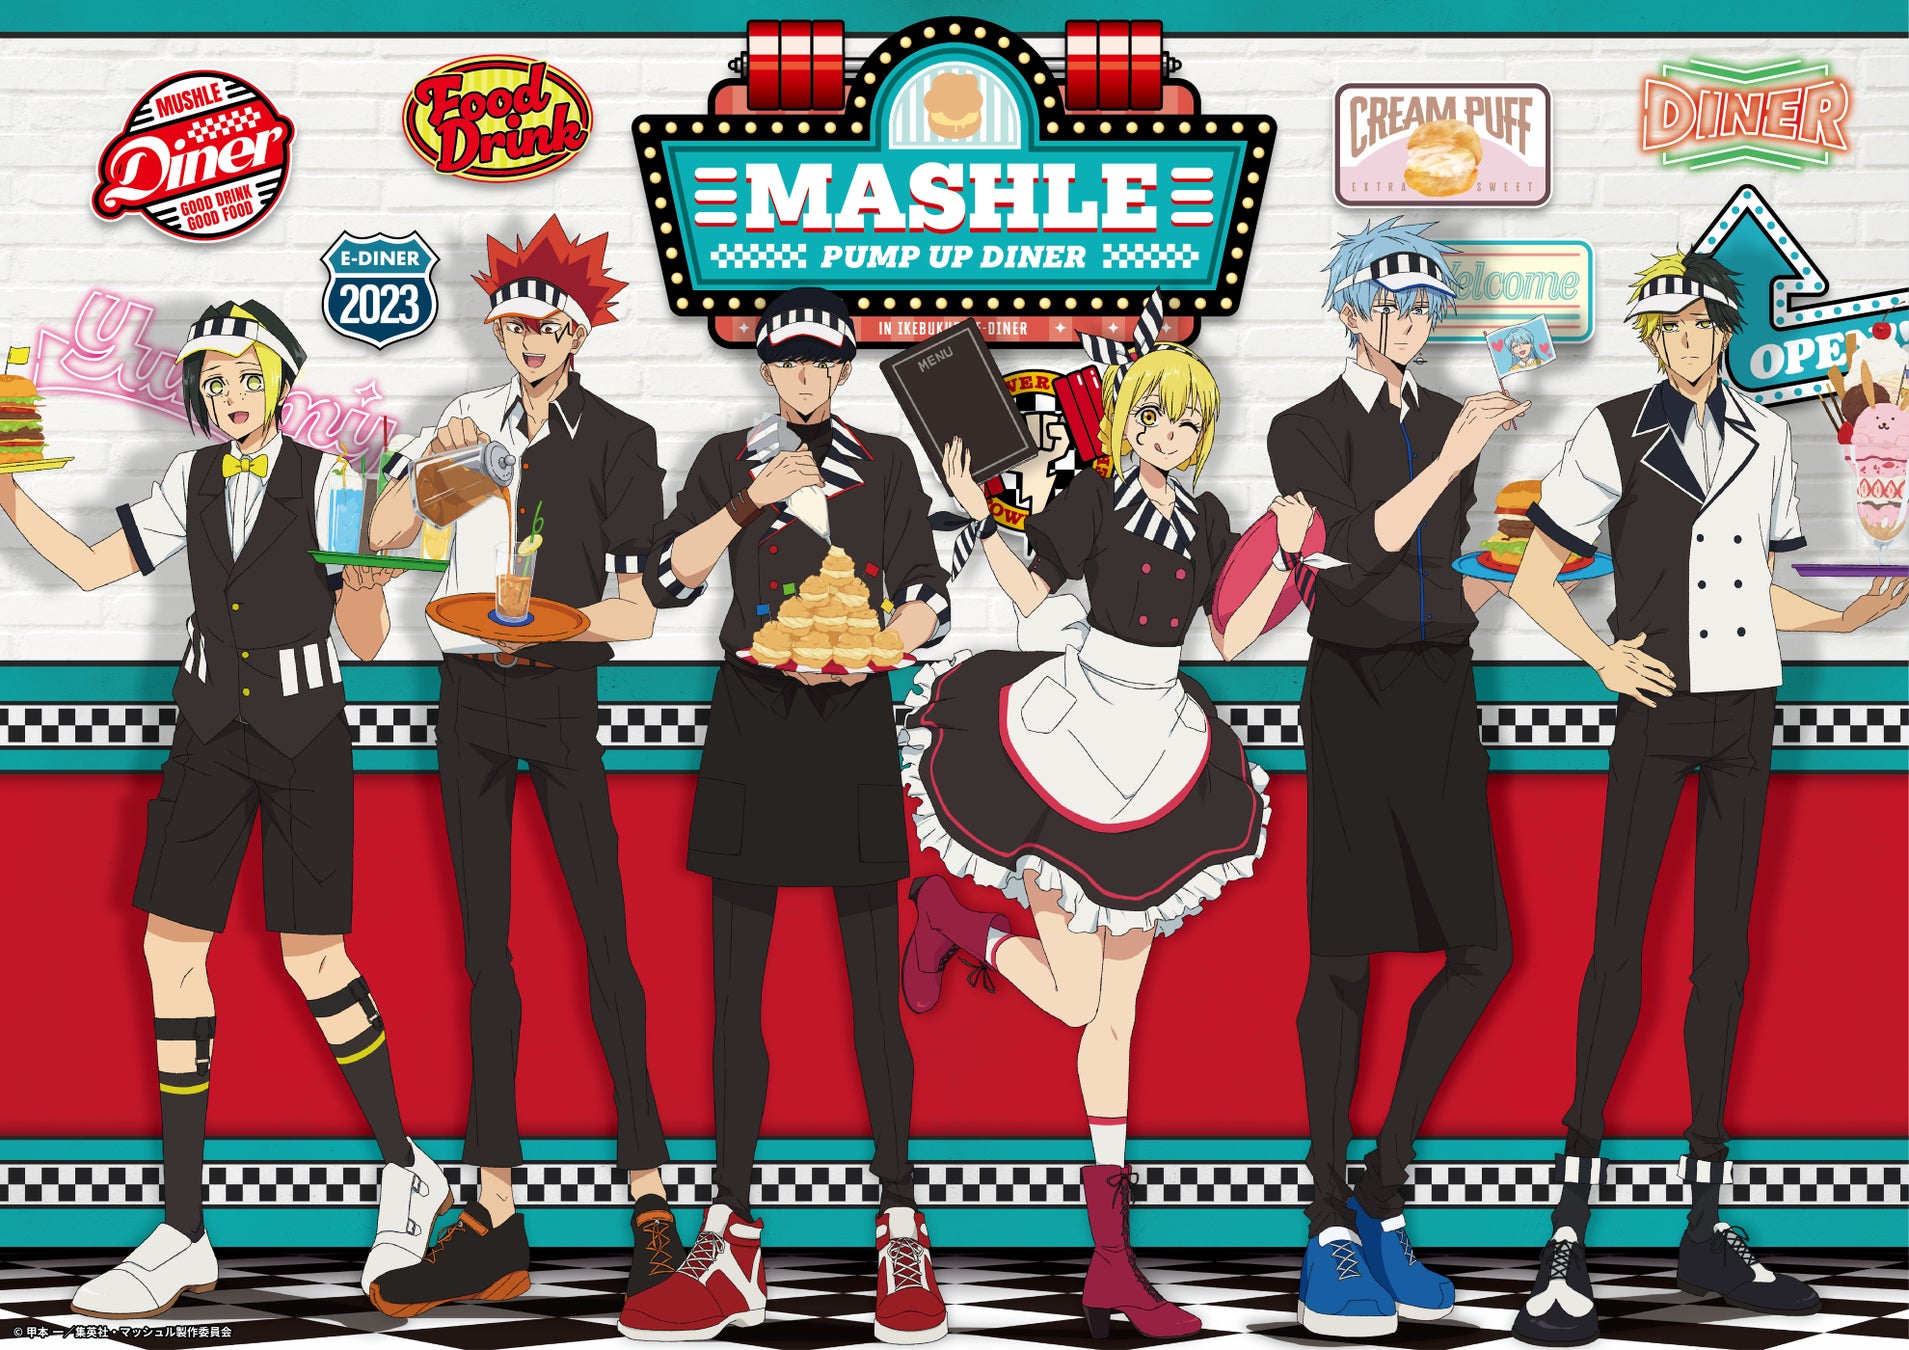 TVアニメ『マッシュル-MASHLE-』ポップアップショップ「MASHLE PUMP UP DINER」が開催決定！